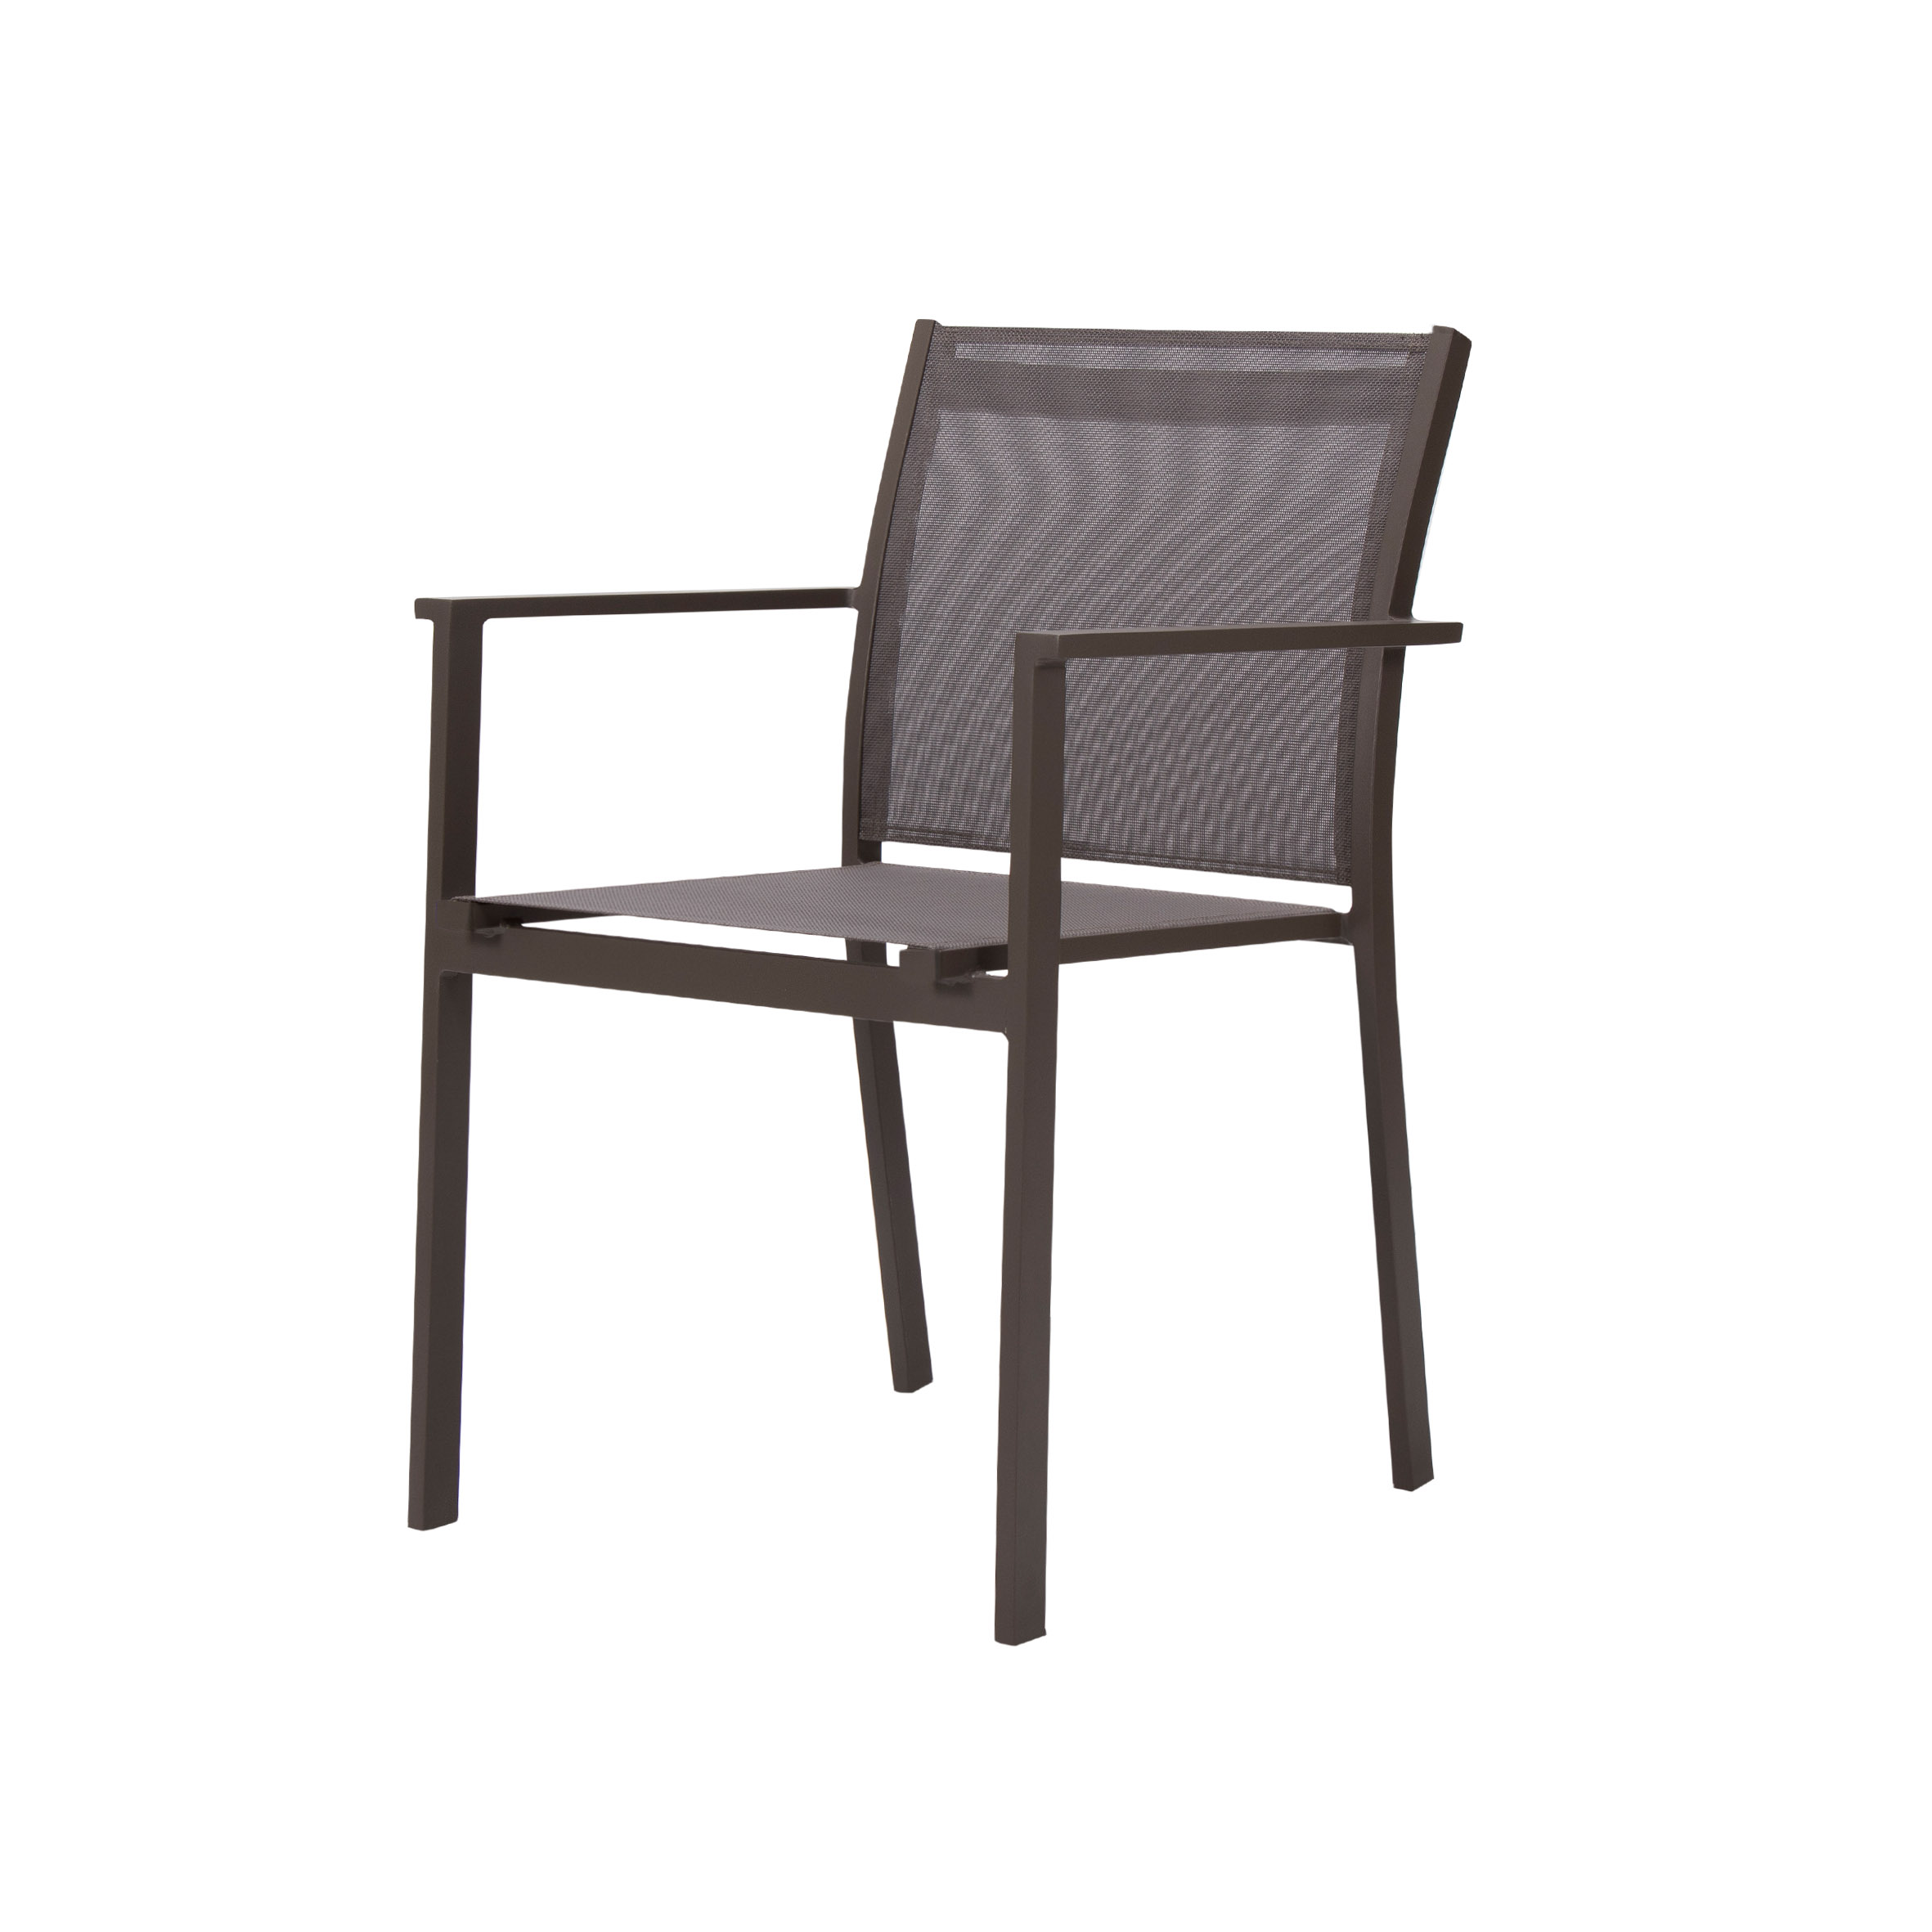 Kotka sling dining chair S8